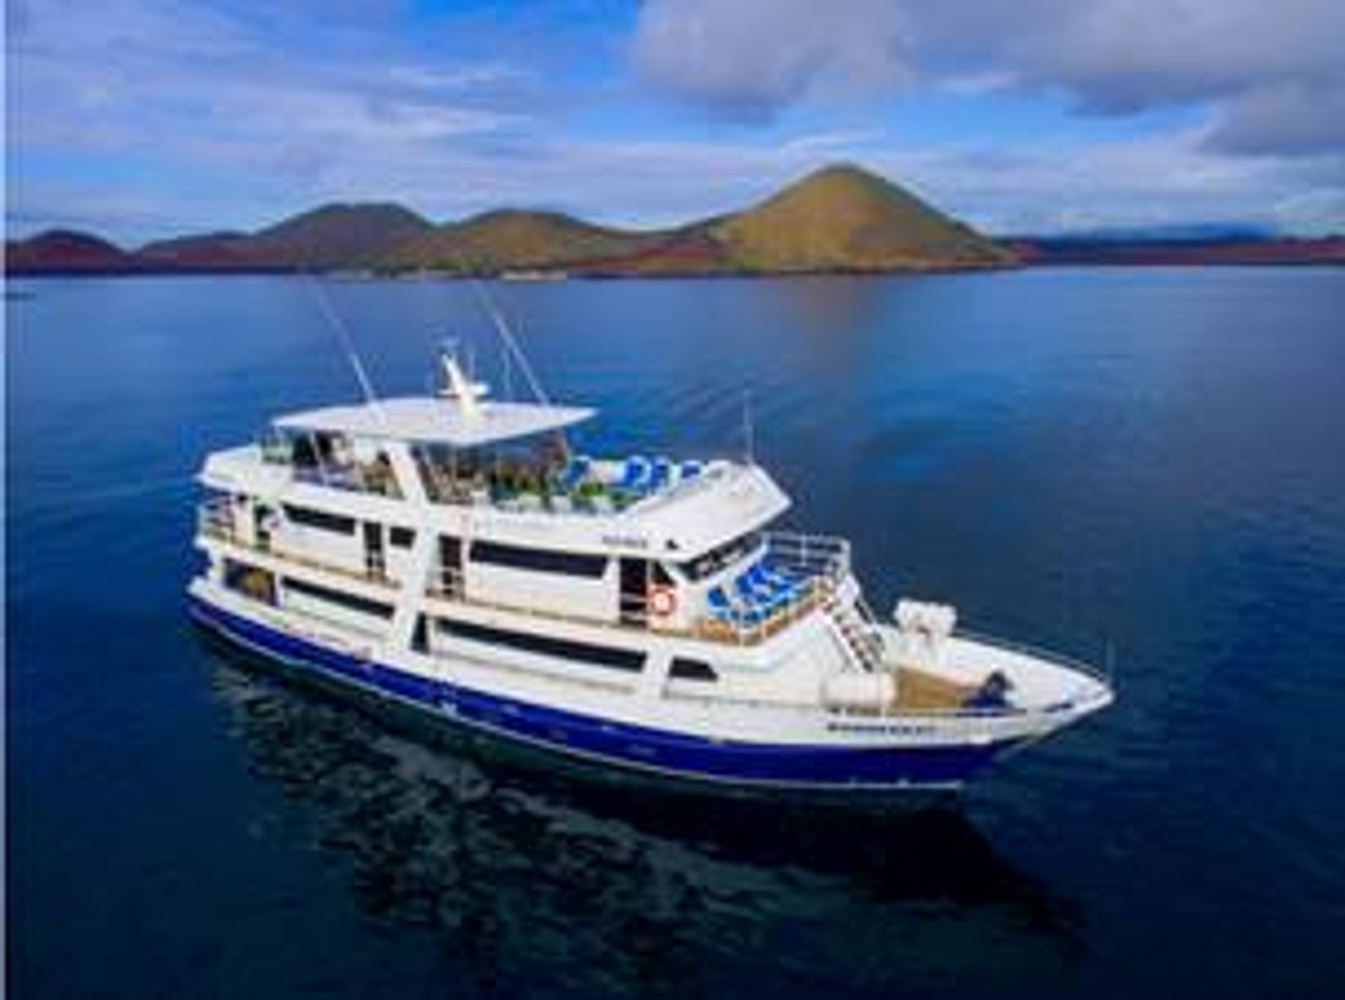 Monserrat Galapagos 4 Day Cruise Itin D (Lower Deck Shared Twin Cabin)